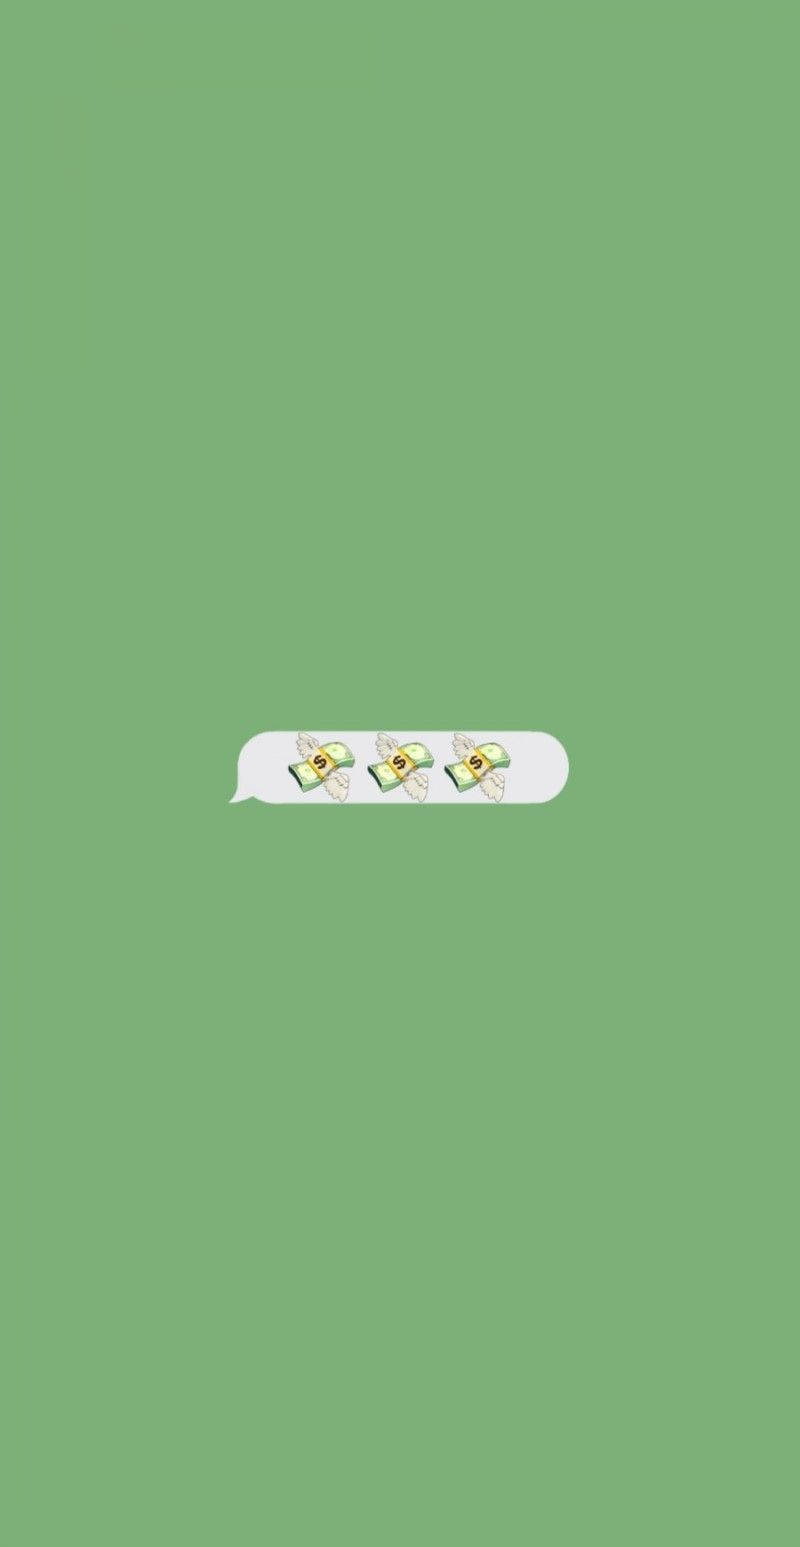 Mint Green Aesthetic Flying Dollar Wallpaper